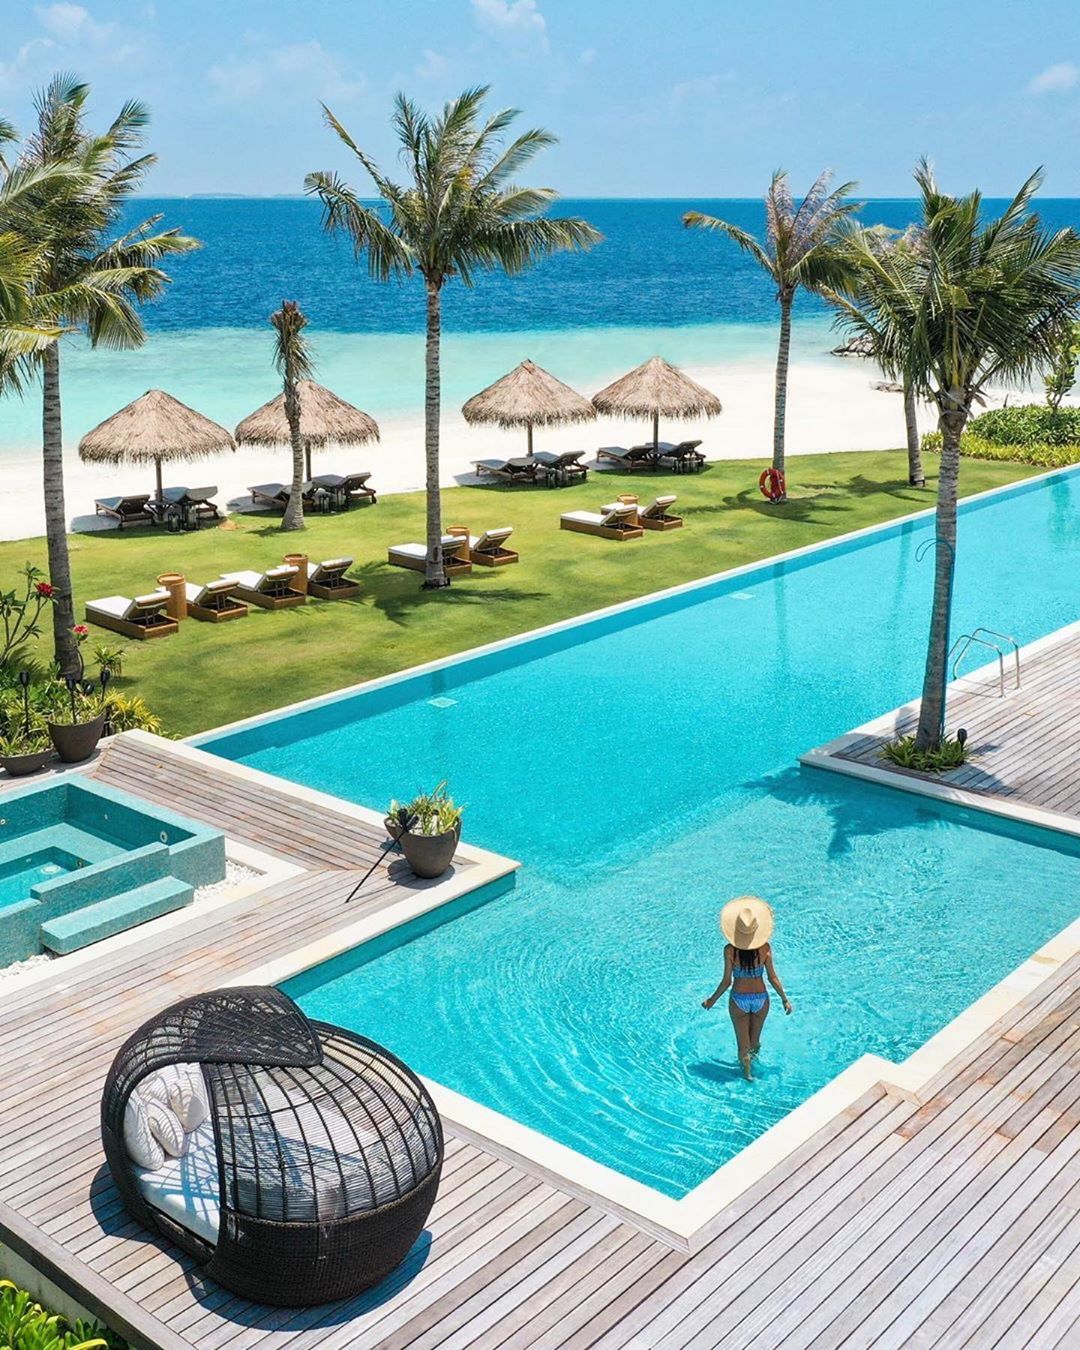 About Beaty World - 💙Ocean or pool? ☀️🌊🌴
.
.
.
📸 @michutravel
.
#ocean #borabora #maldives #swimmingpool #pool #lifestyle #travel #summer #summertrip